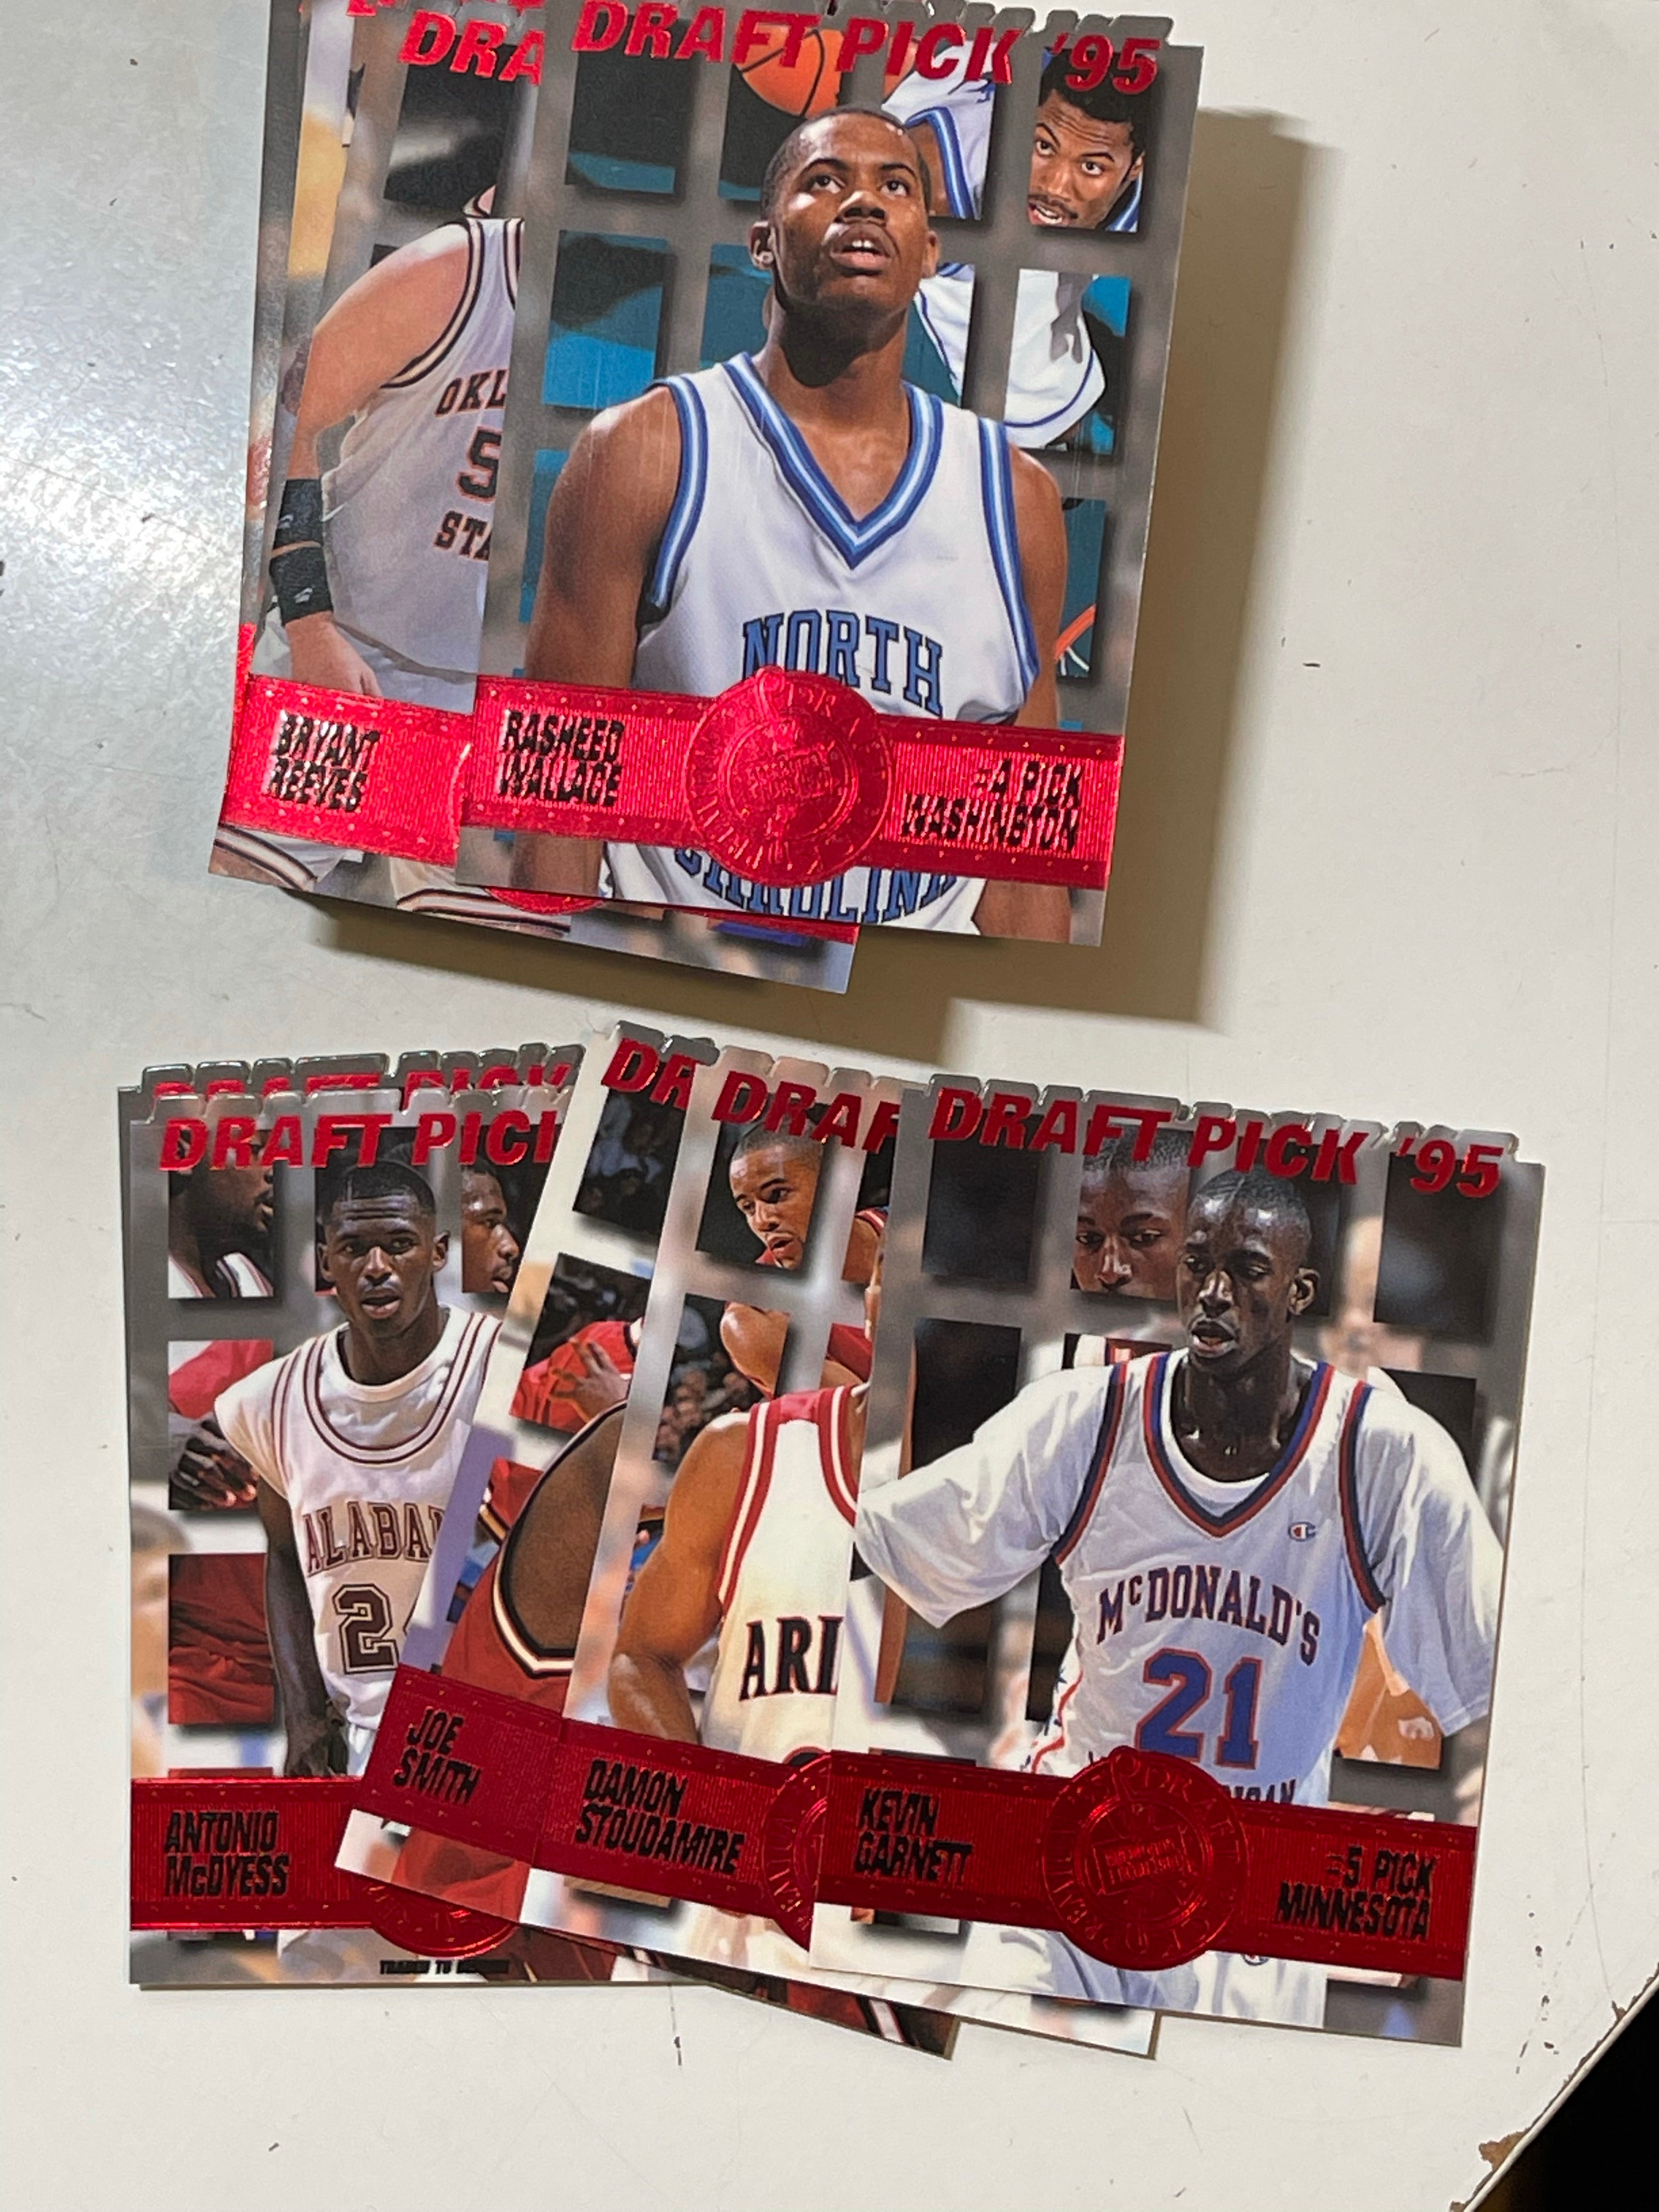 1995 Press pass Die cut complete basketball insert cards set